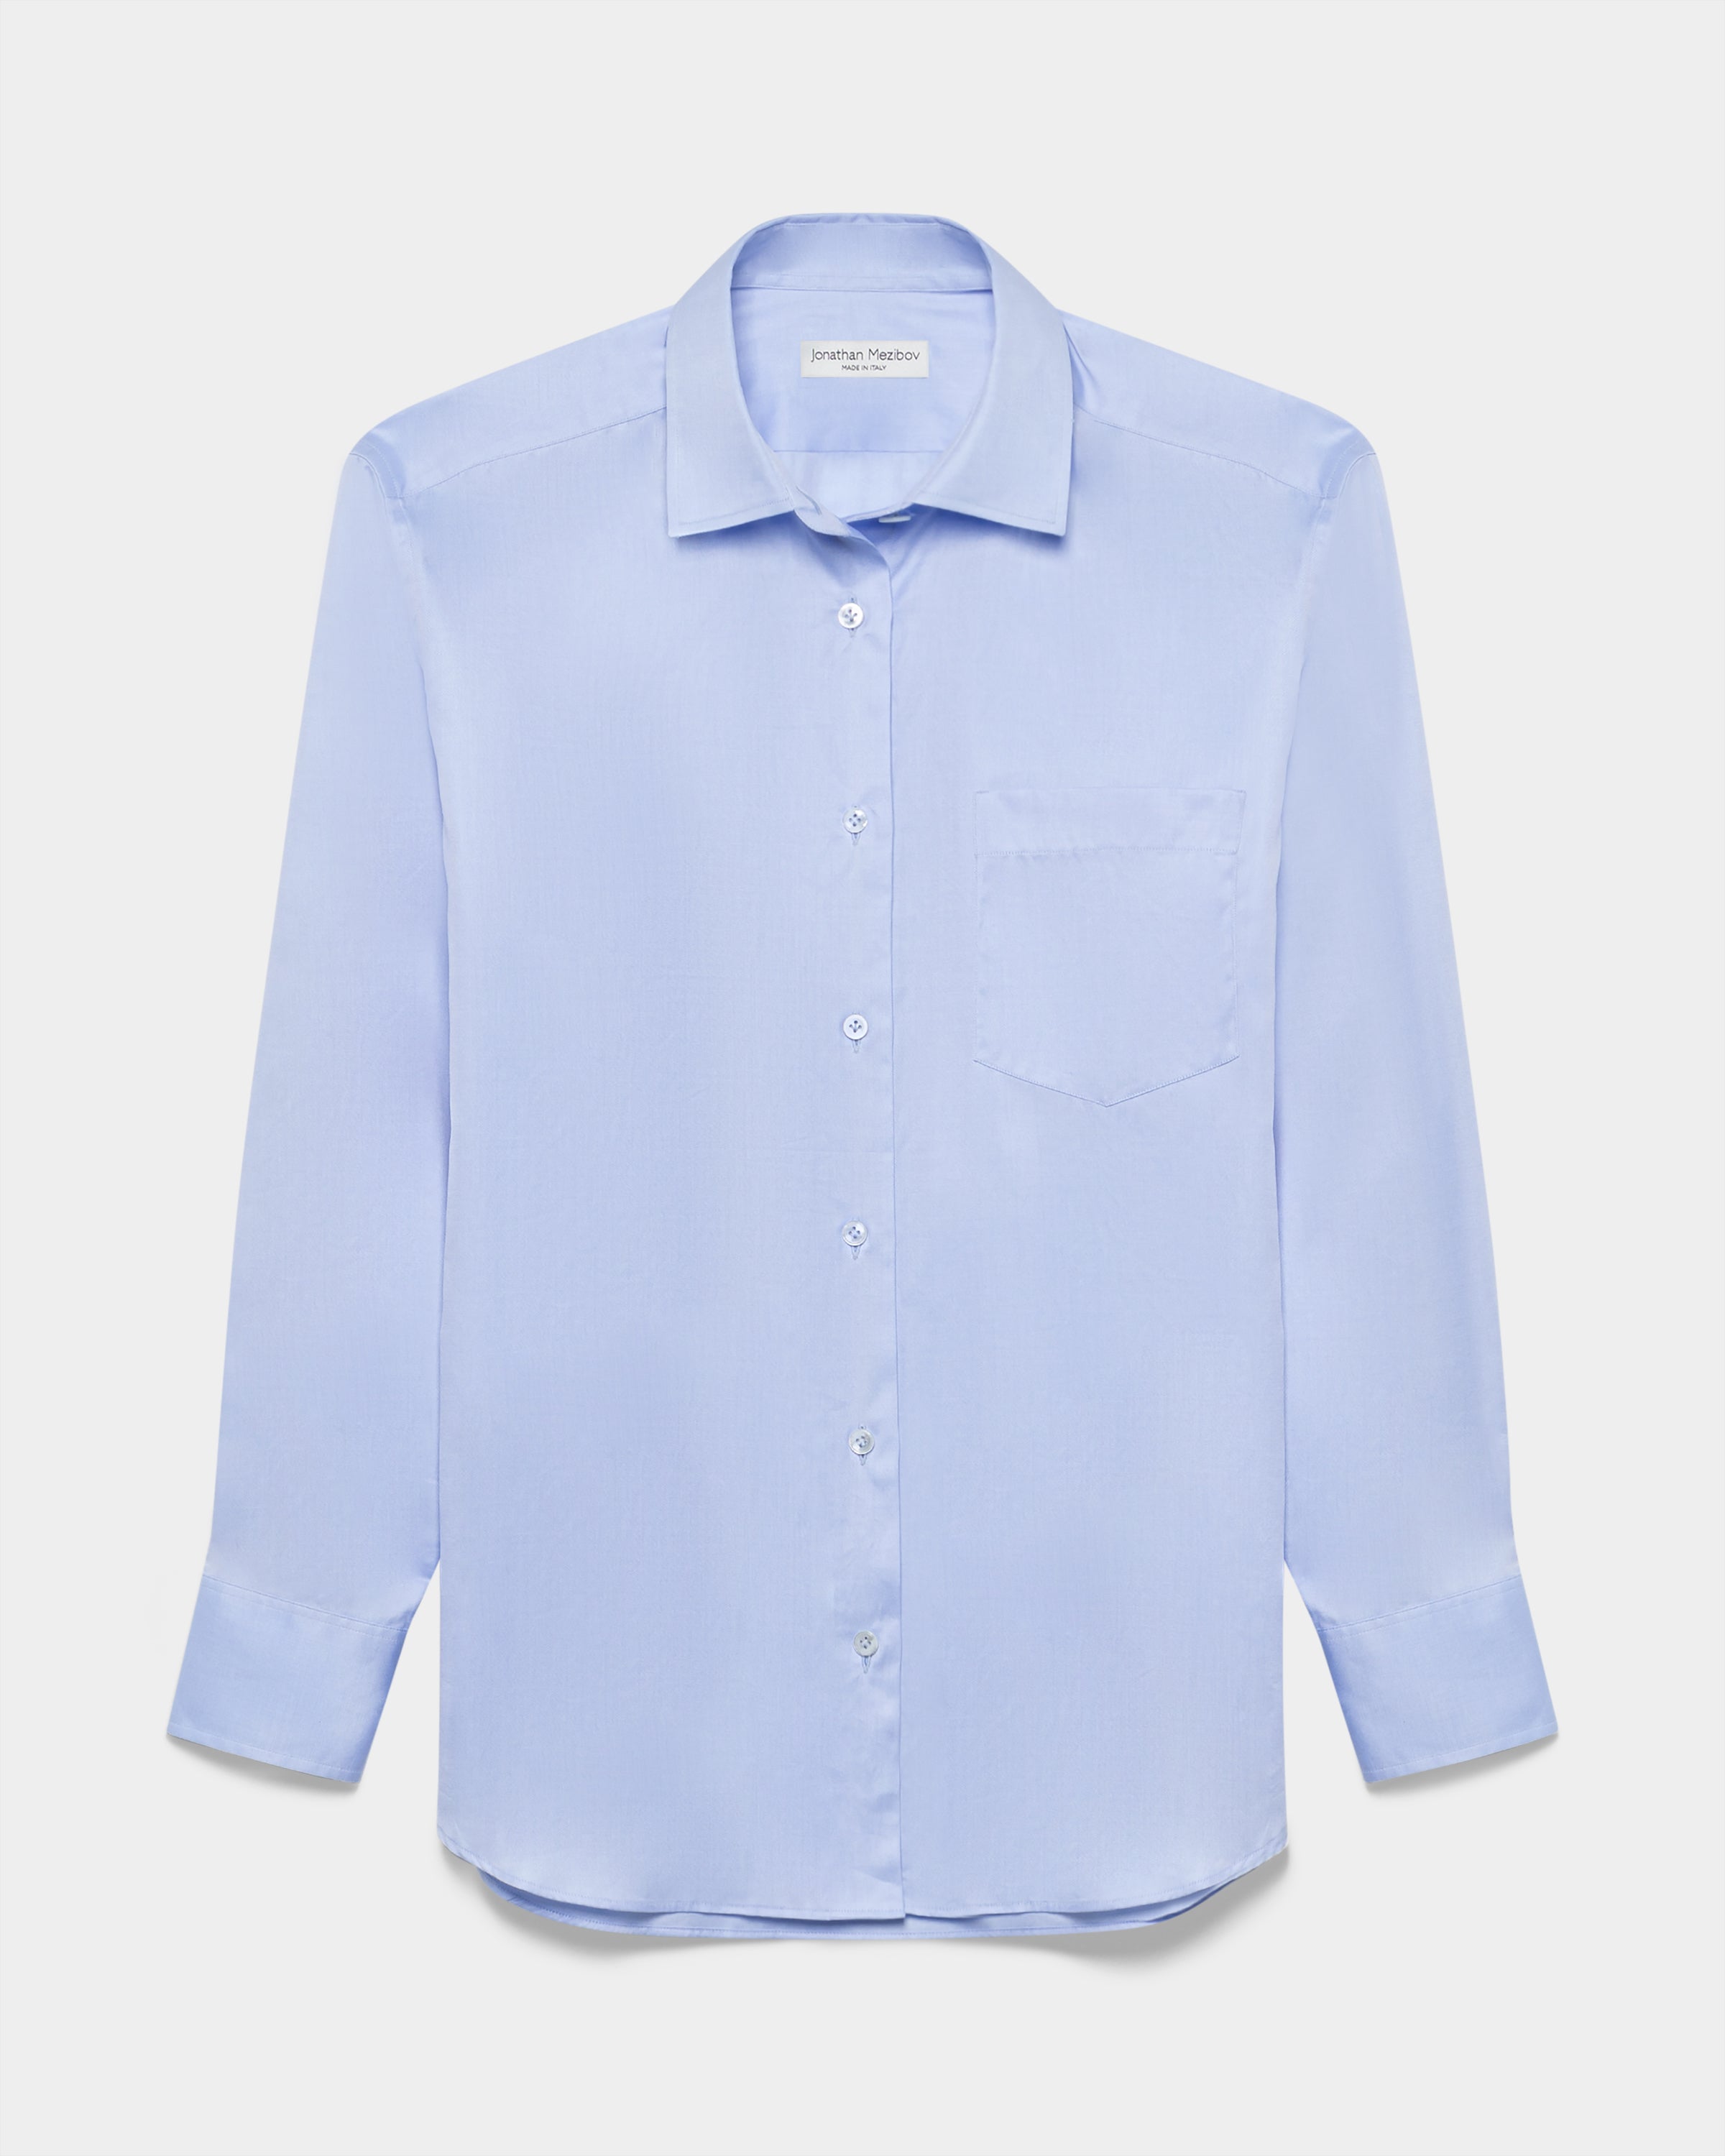 Fletcher Twill Shirt - Made to Order